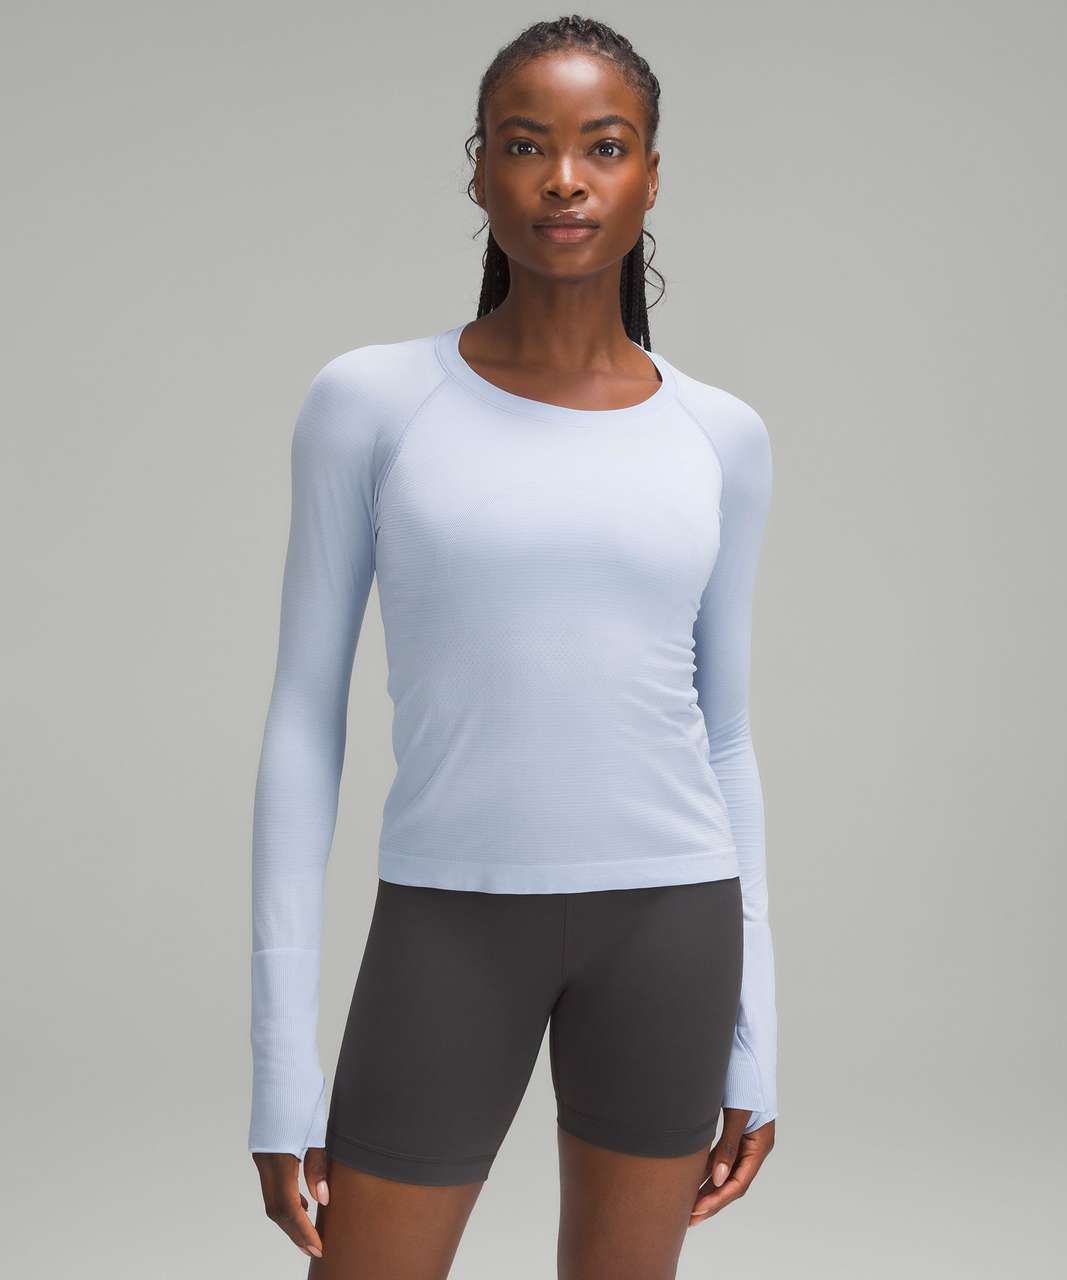 Lululemon Swiftly Tech Long-Sleeve Shirt 2.0 *Race Length - Blue